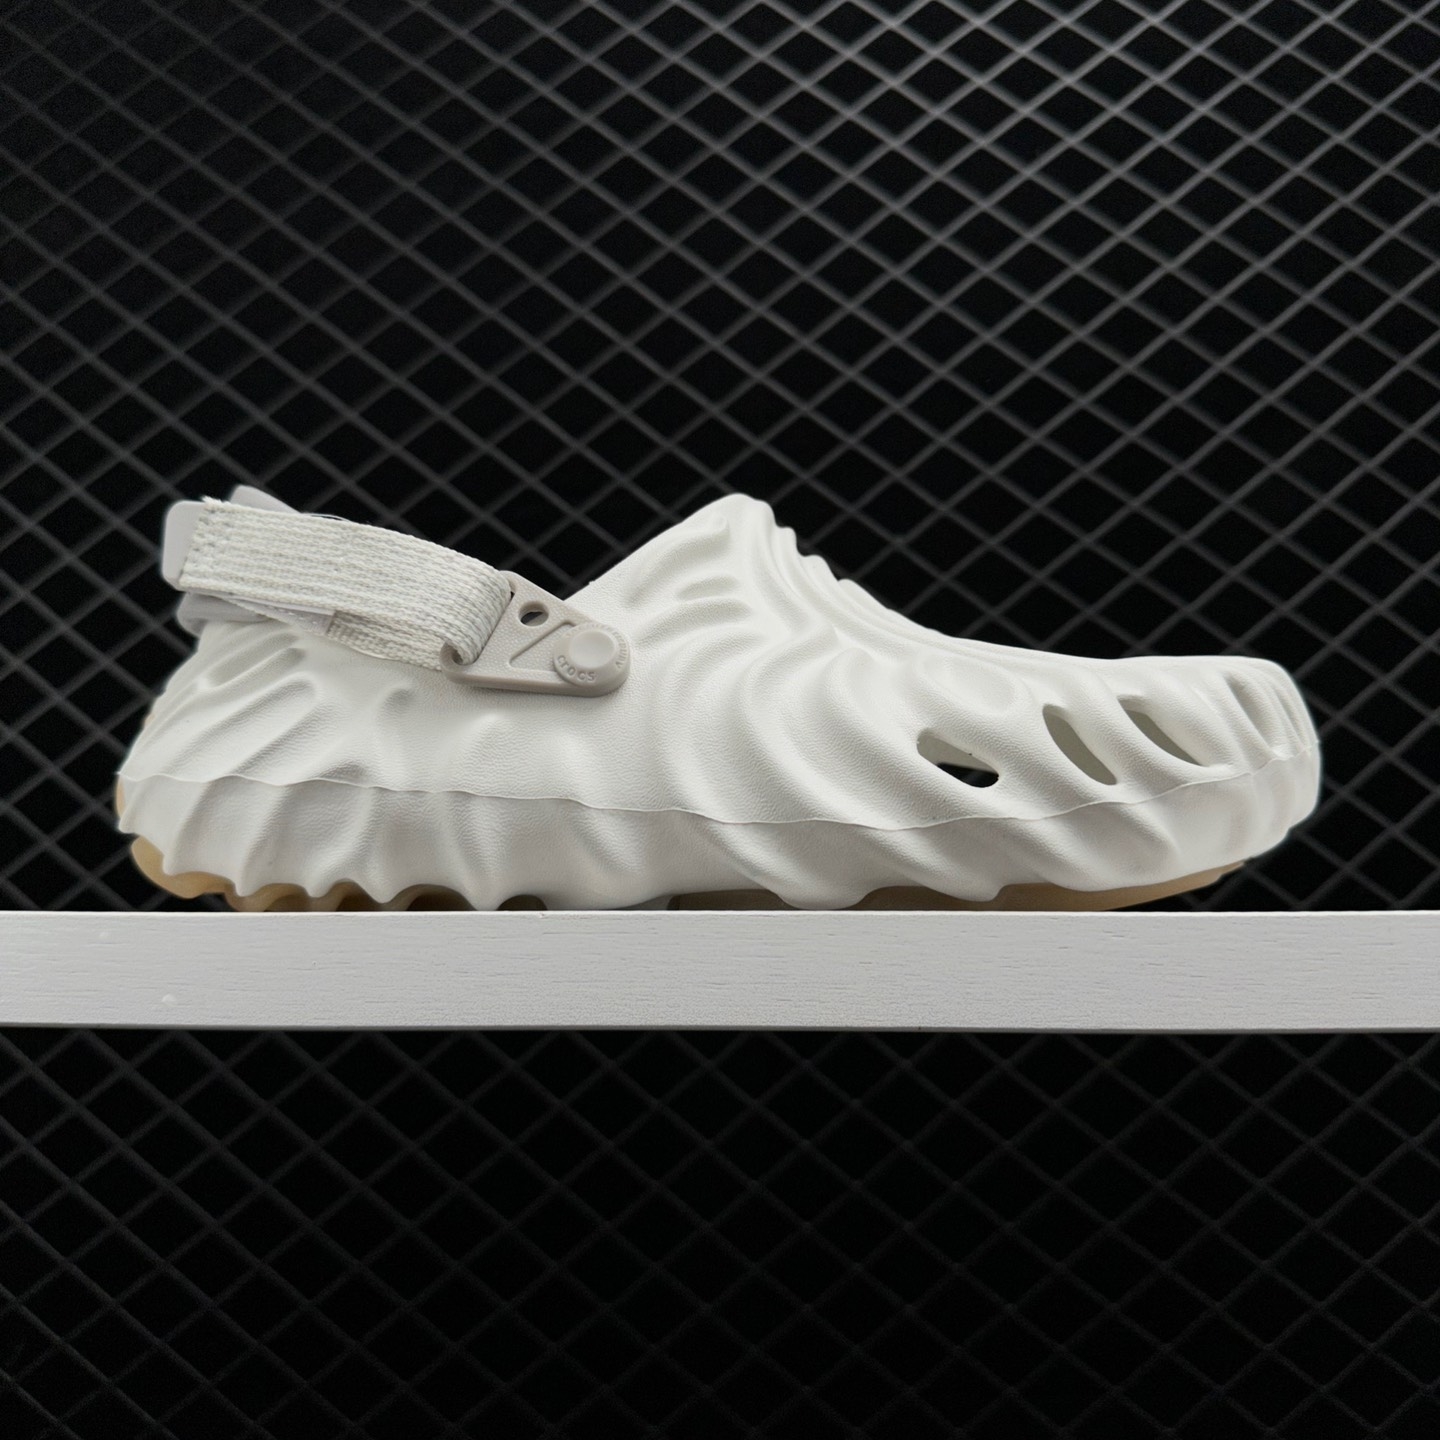 Crocs Salehe Bembury x Pollex Clog 'Stratus' 207393 1CN - Limited Edition Collaboration Footwear